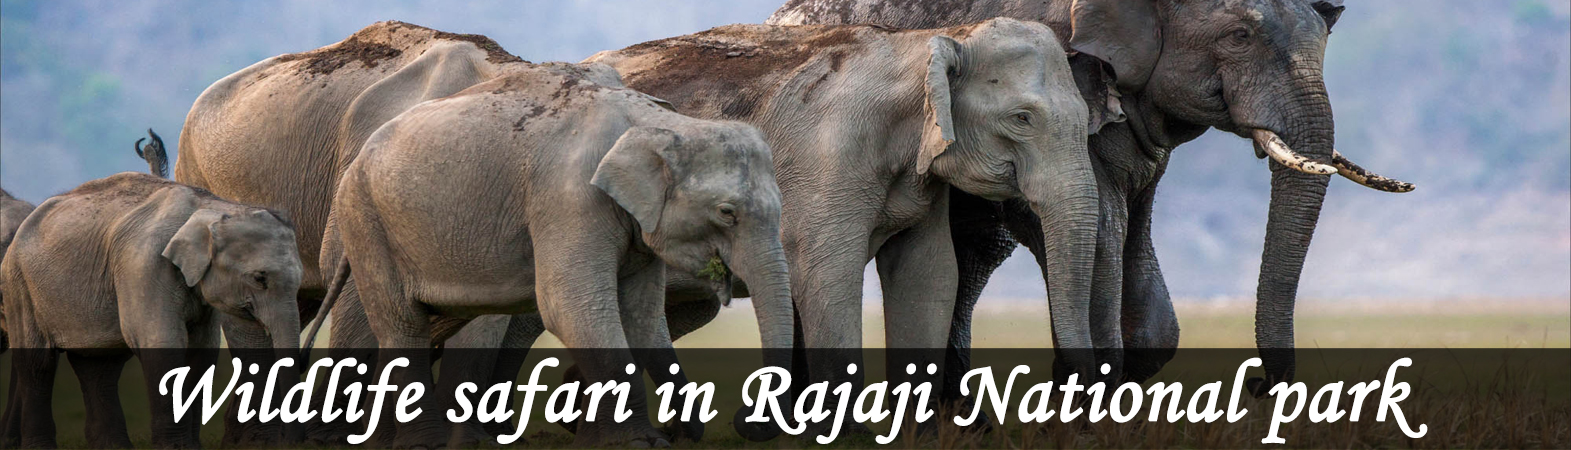 Wildlife Tour in Rajaji National Park